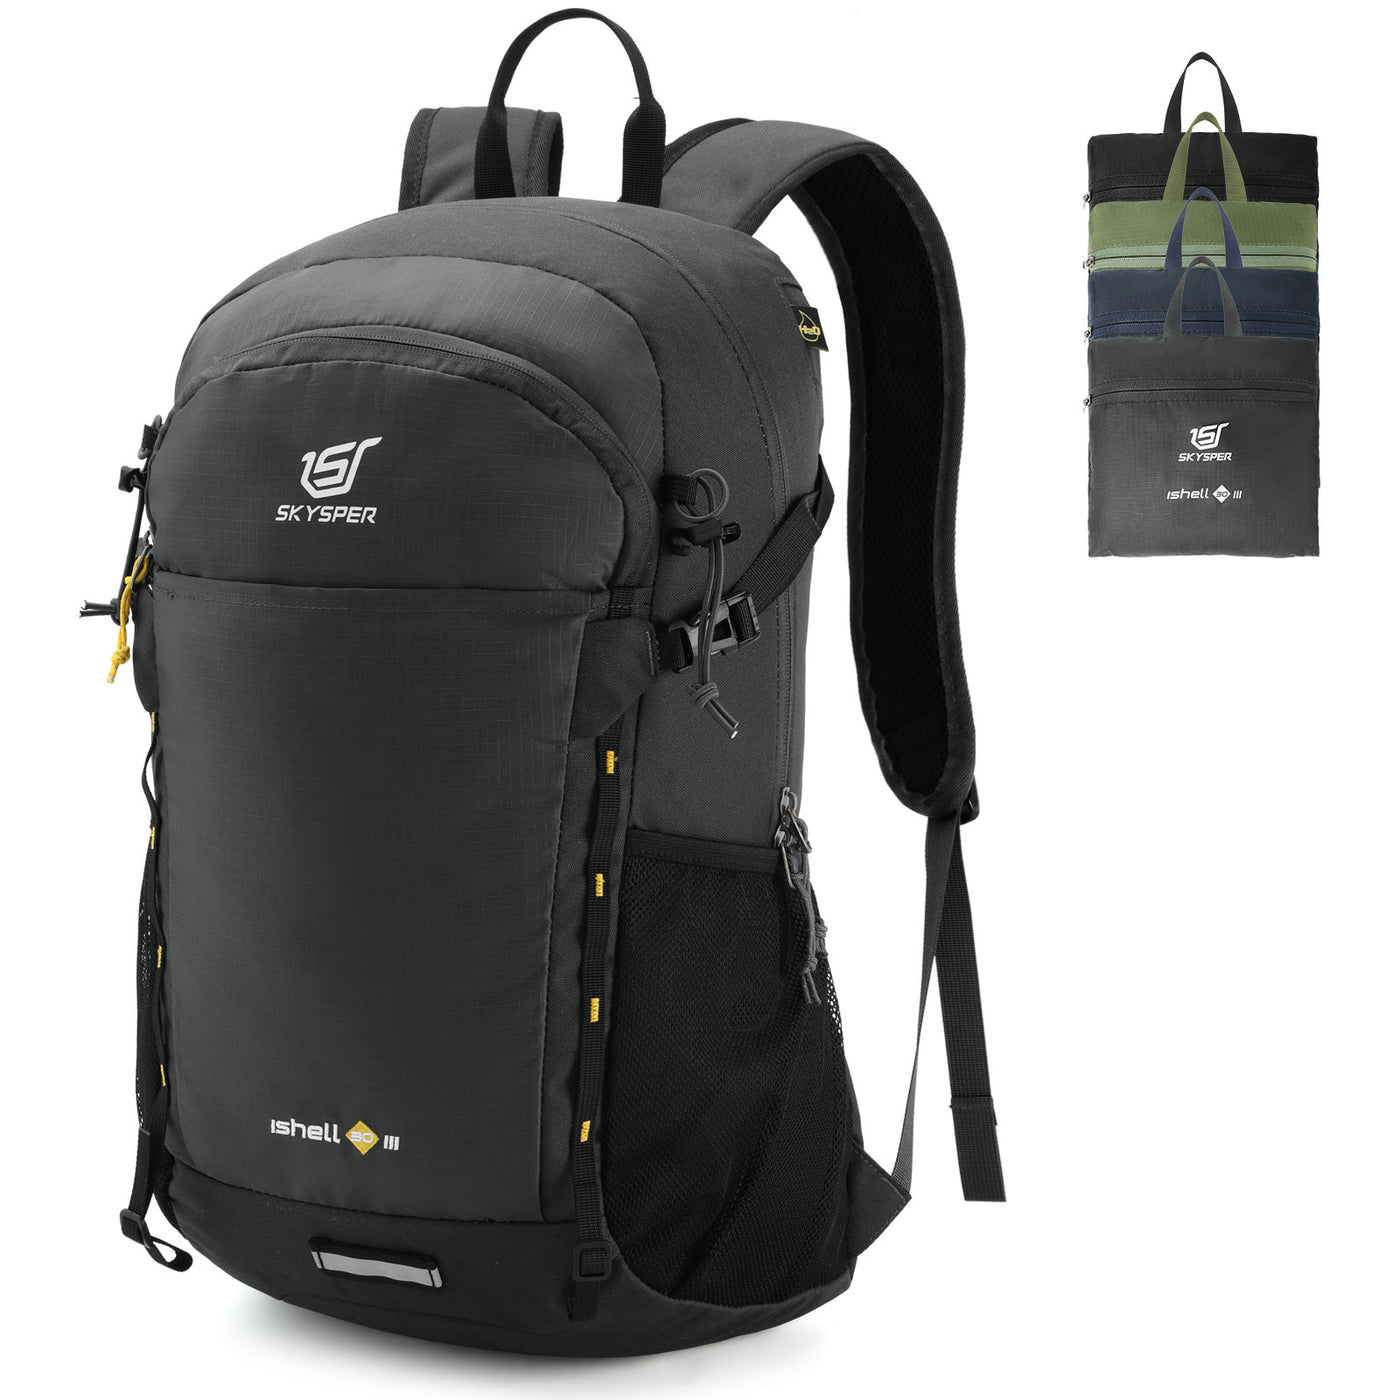 ISHELL30-III - SKYSPER 30L Lightweight Packable Backpack